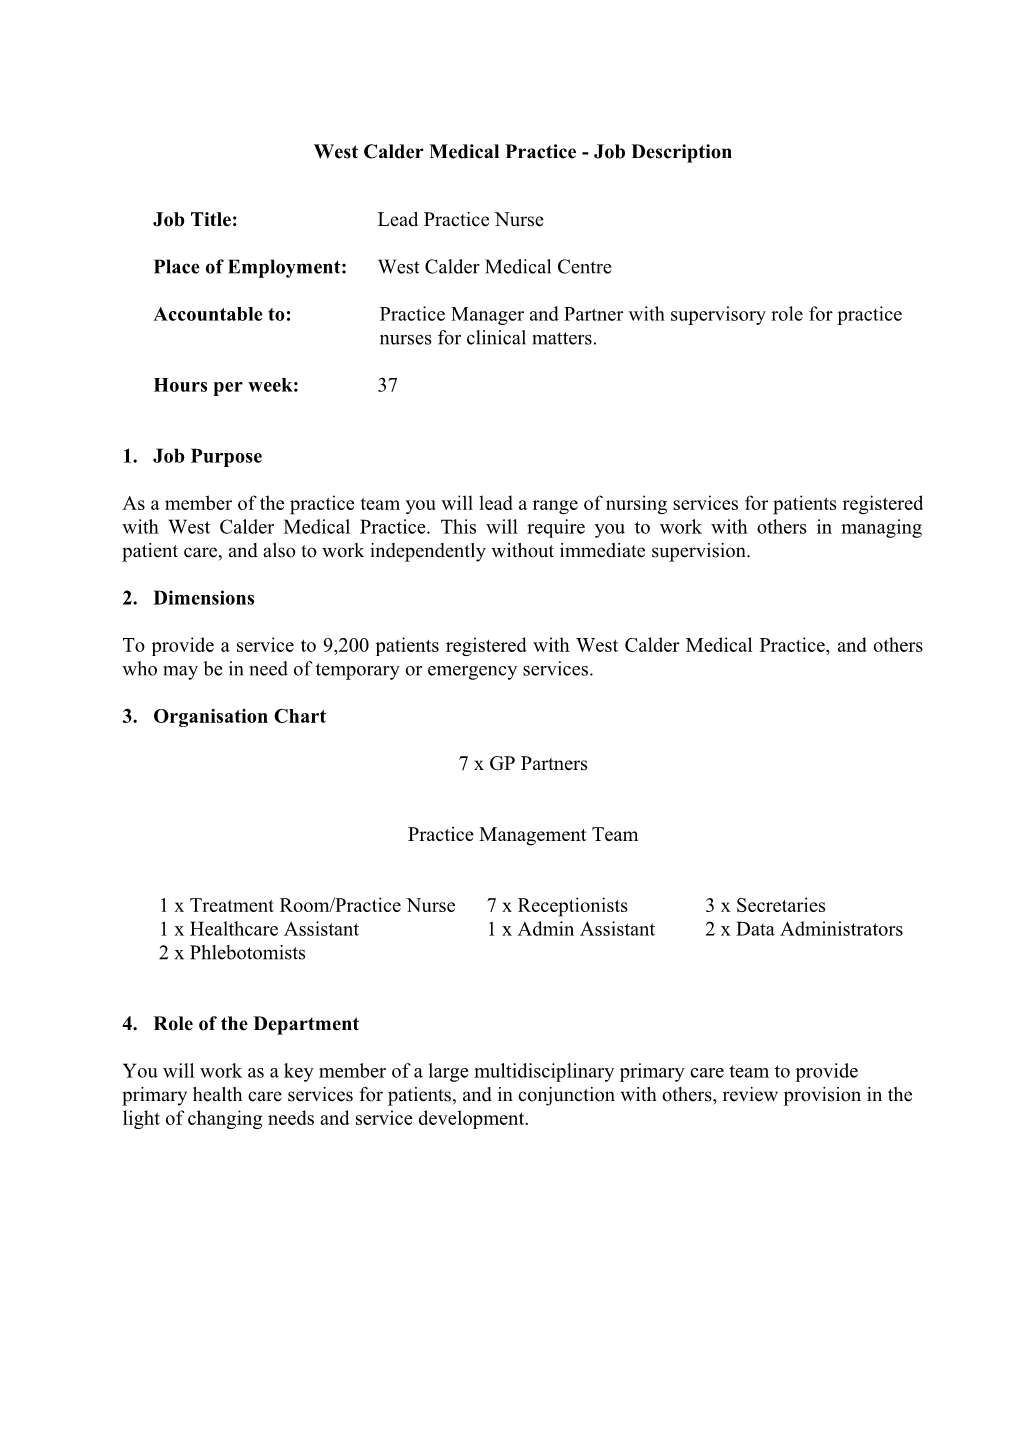 West Calder Medical Practice - Job Description